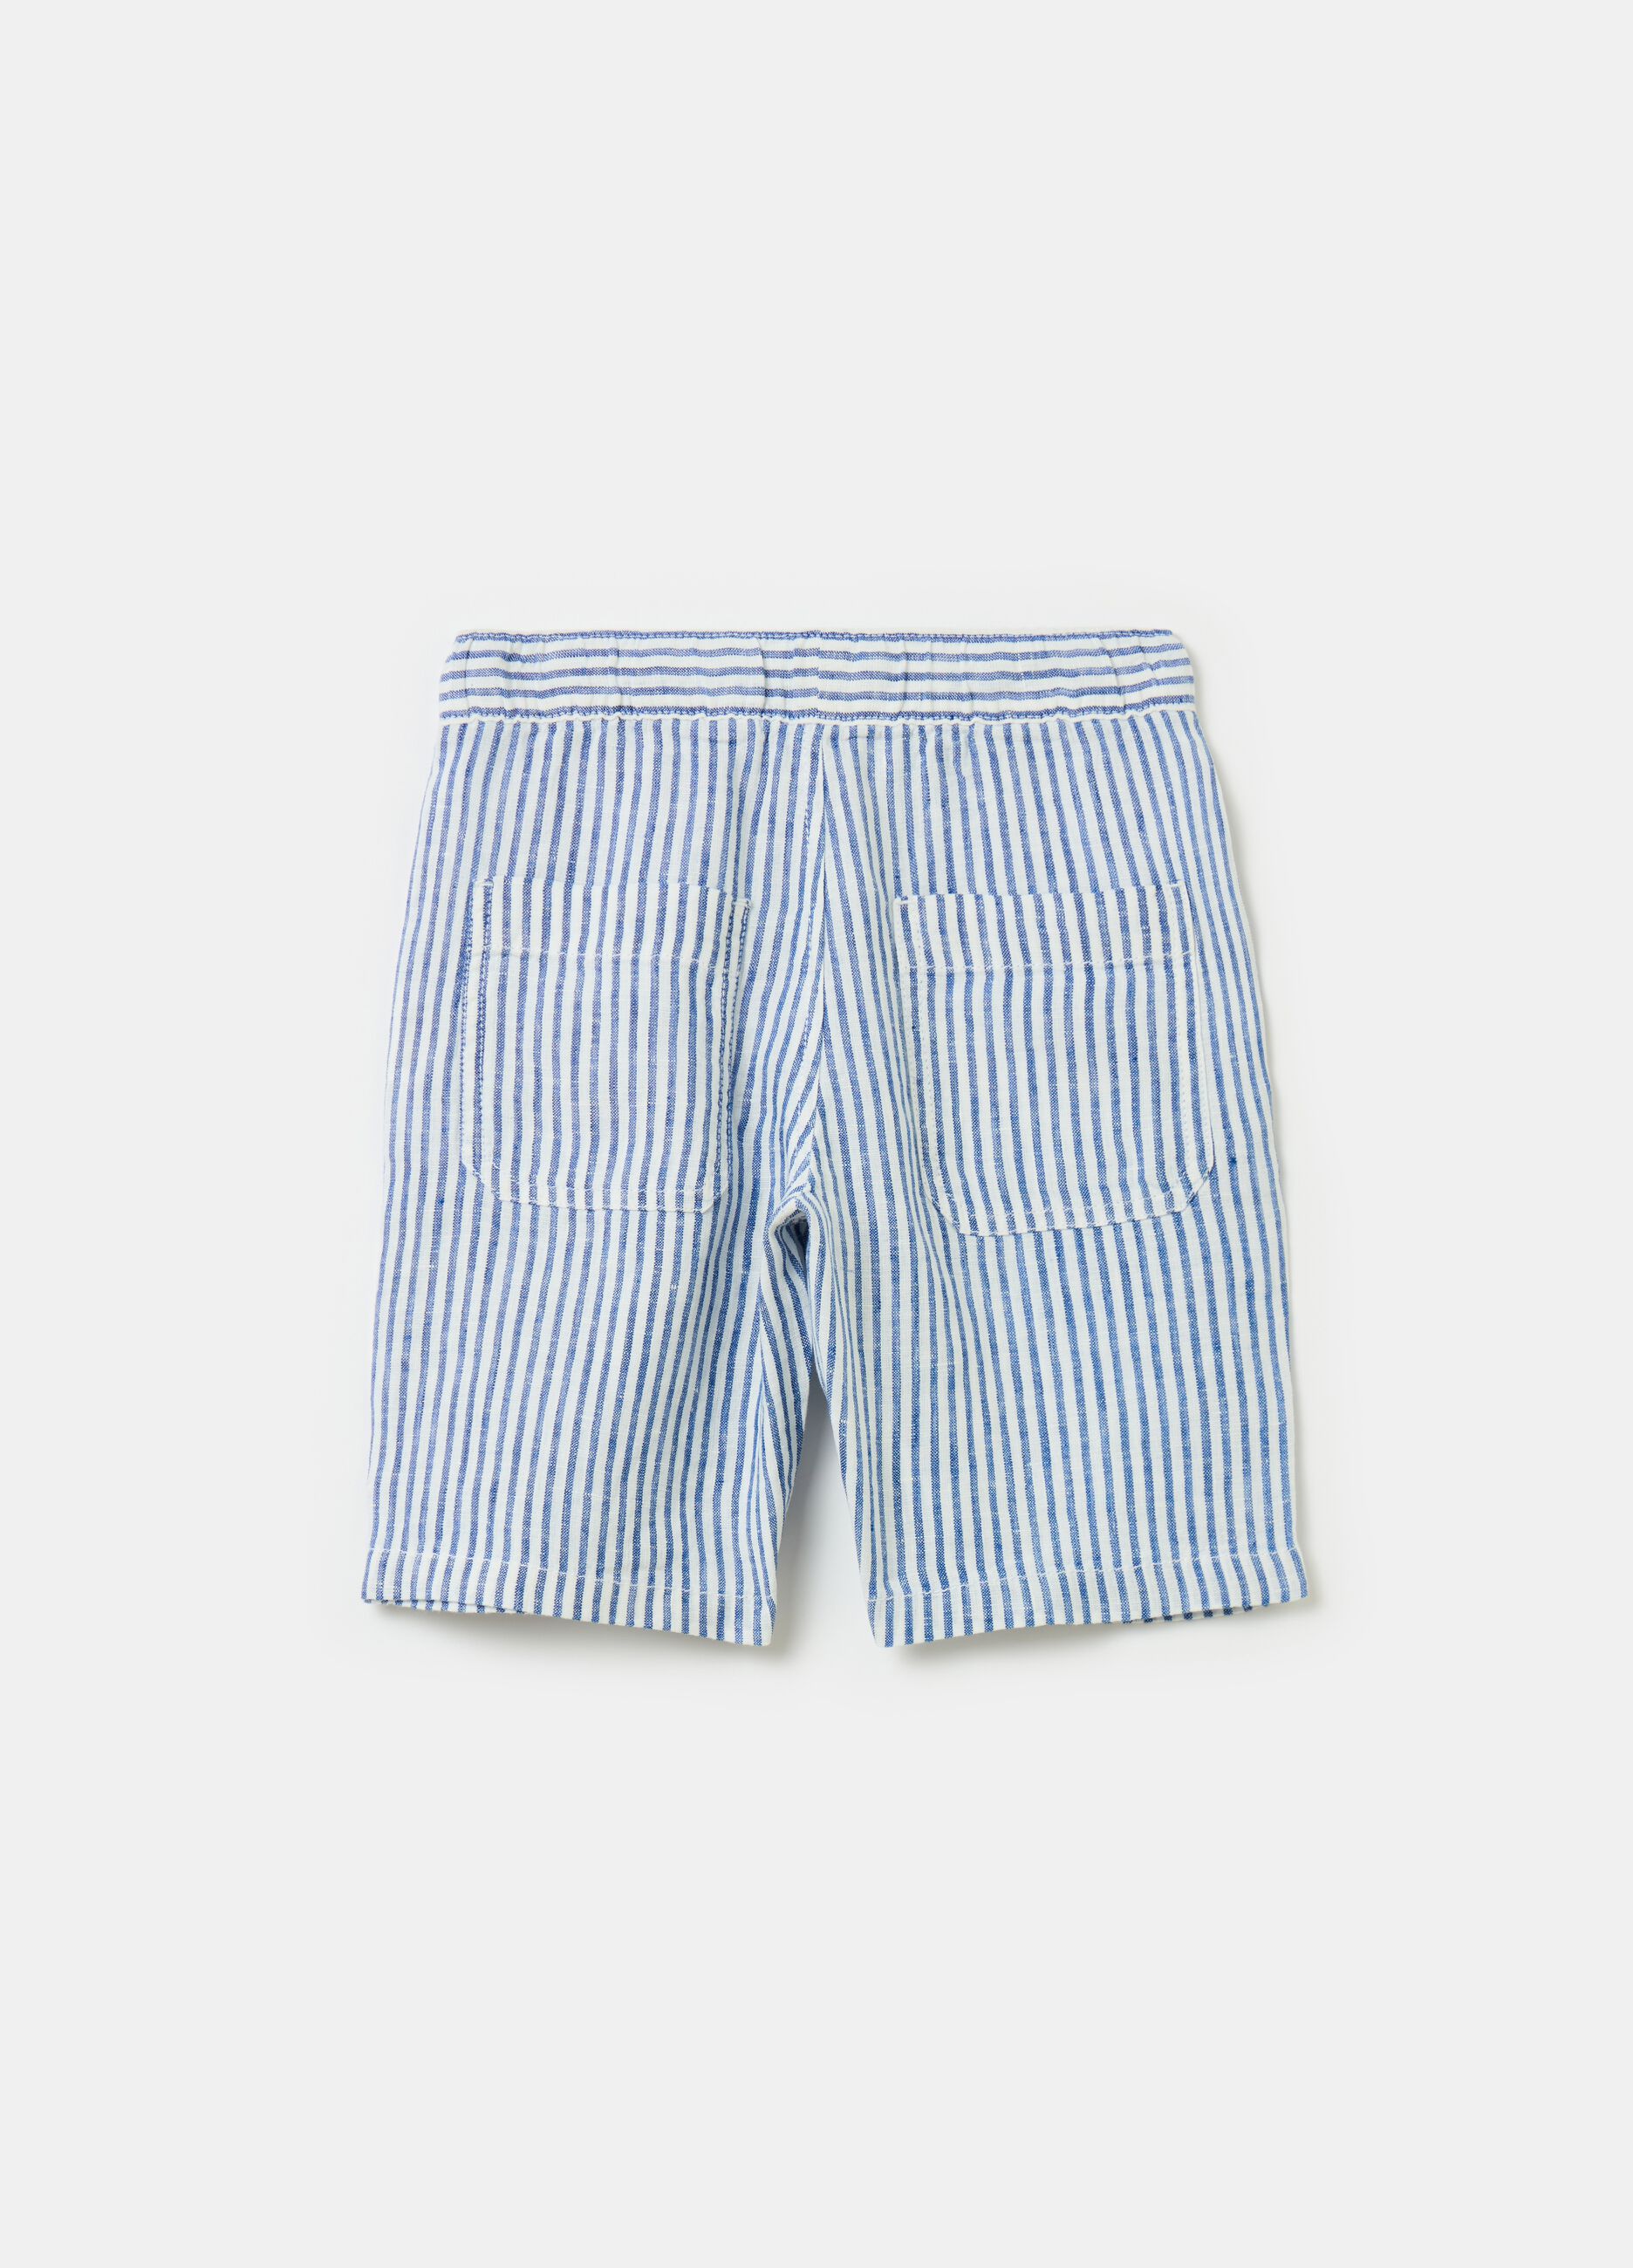 Linen Bermuda shorts with pockets